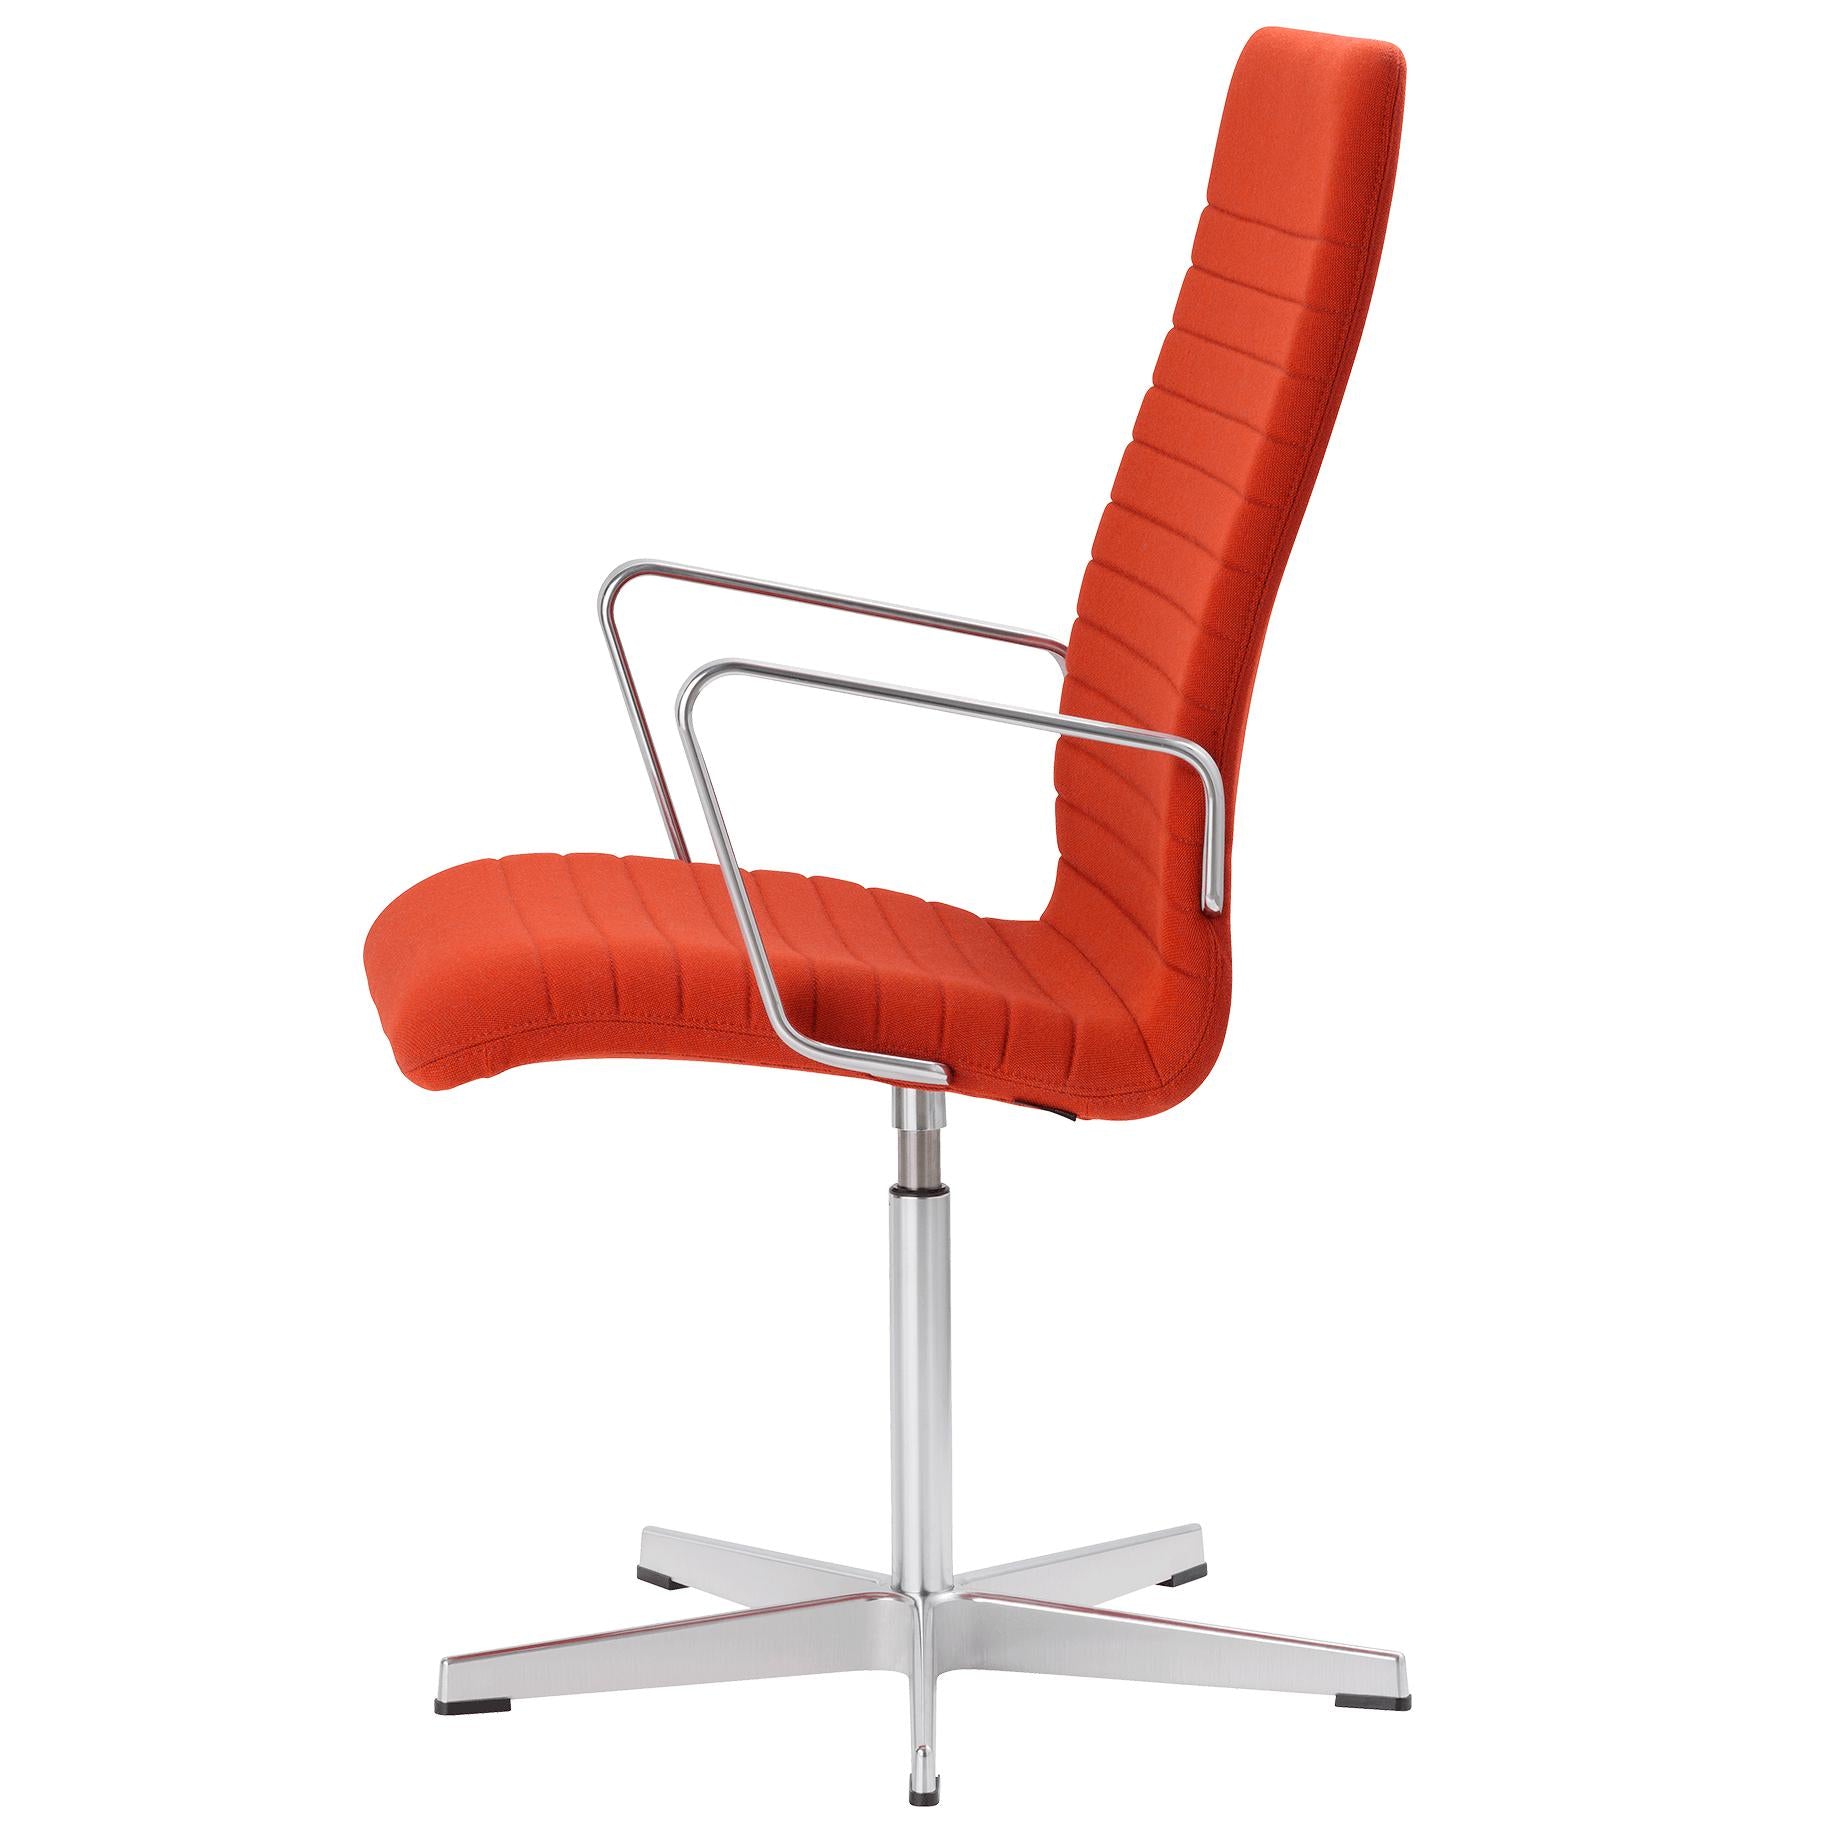 Fritz Hansen Oxford Premium fauteuile stof middelste rugleuning, Rime Red